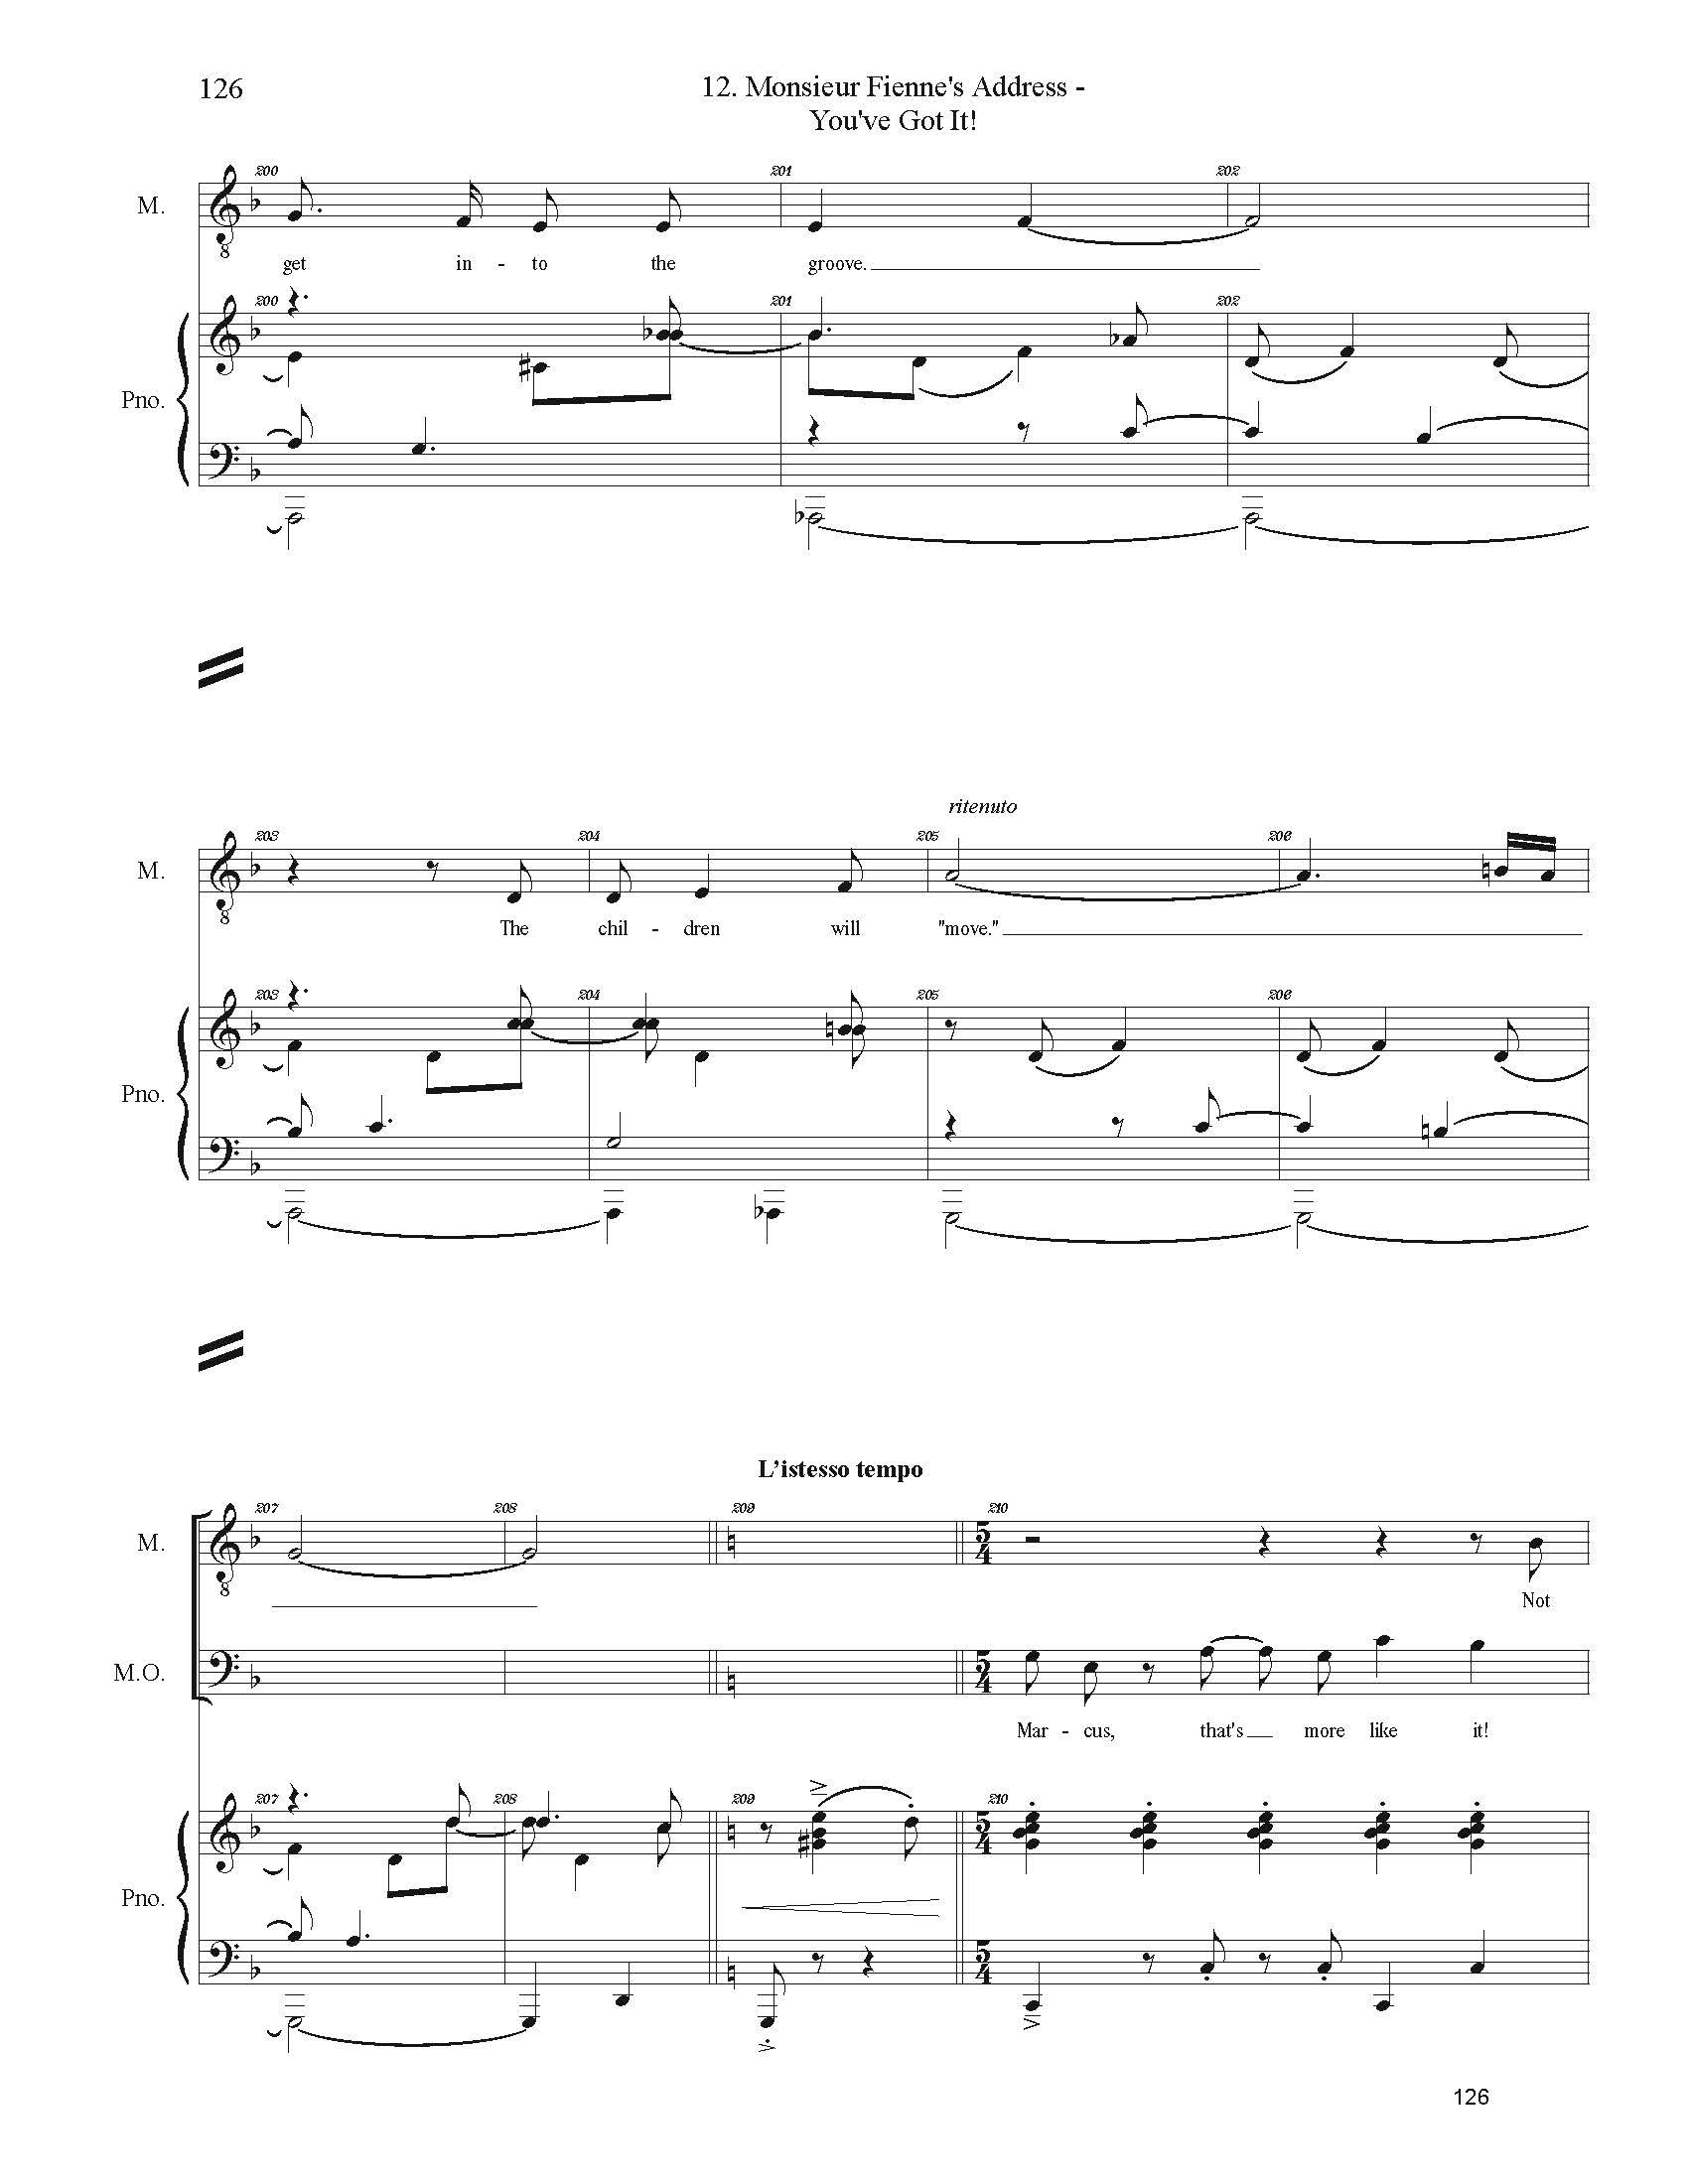 FULL PIANO VOCAL SCORE DRAFT 1 - Score_Page_126.jpg